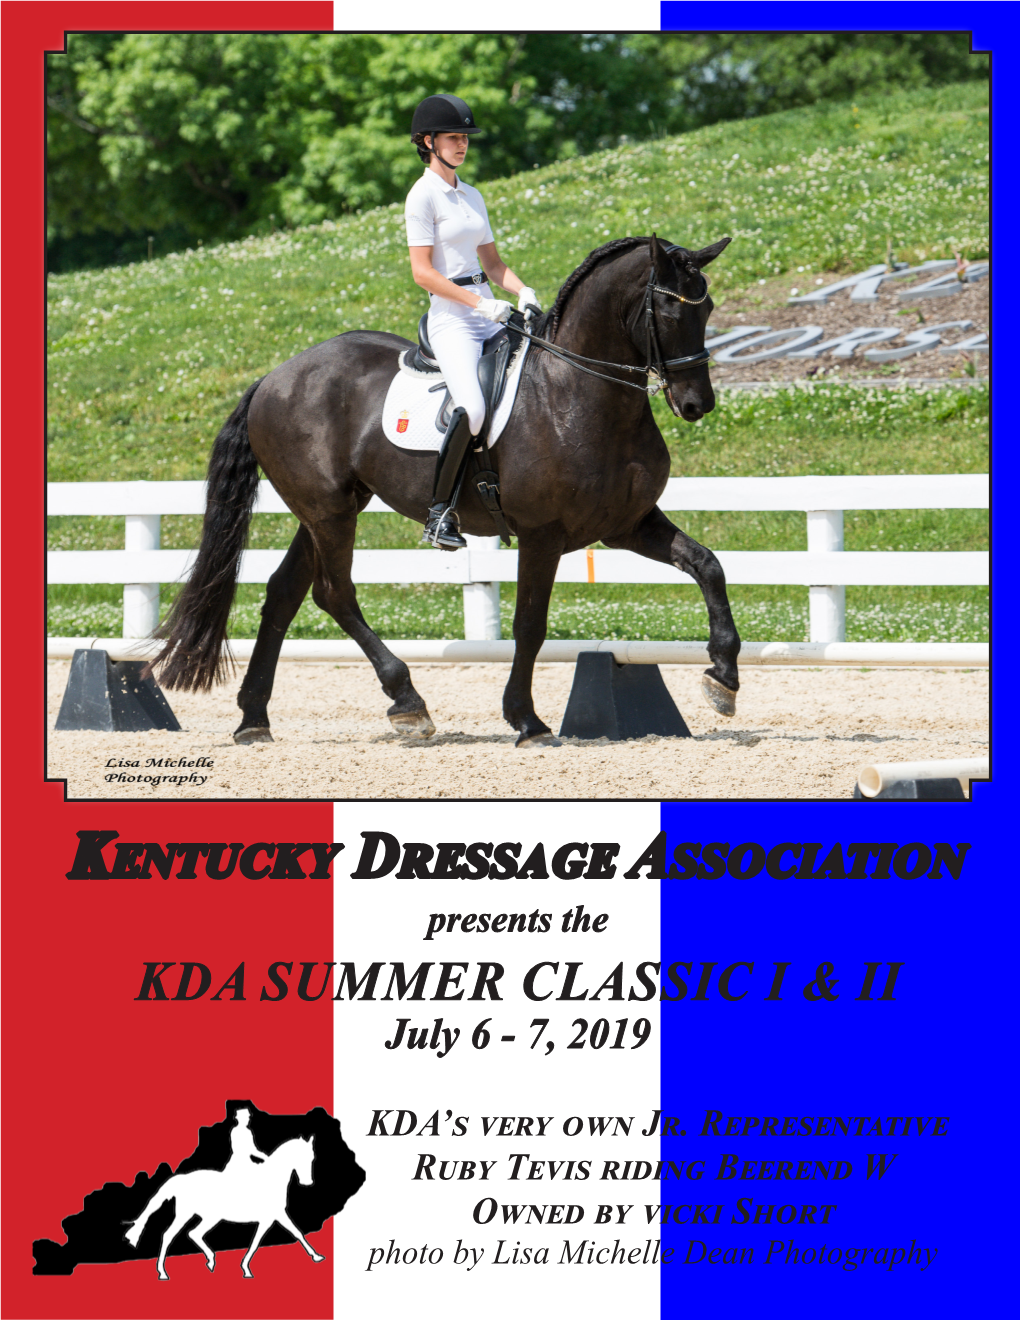 Kentucky Dressage Association Presents the KDA SUMMER CLASSIC I & II July 6 - 7, 2019